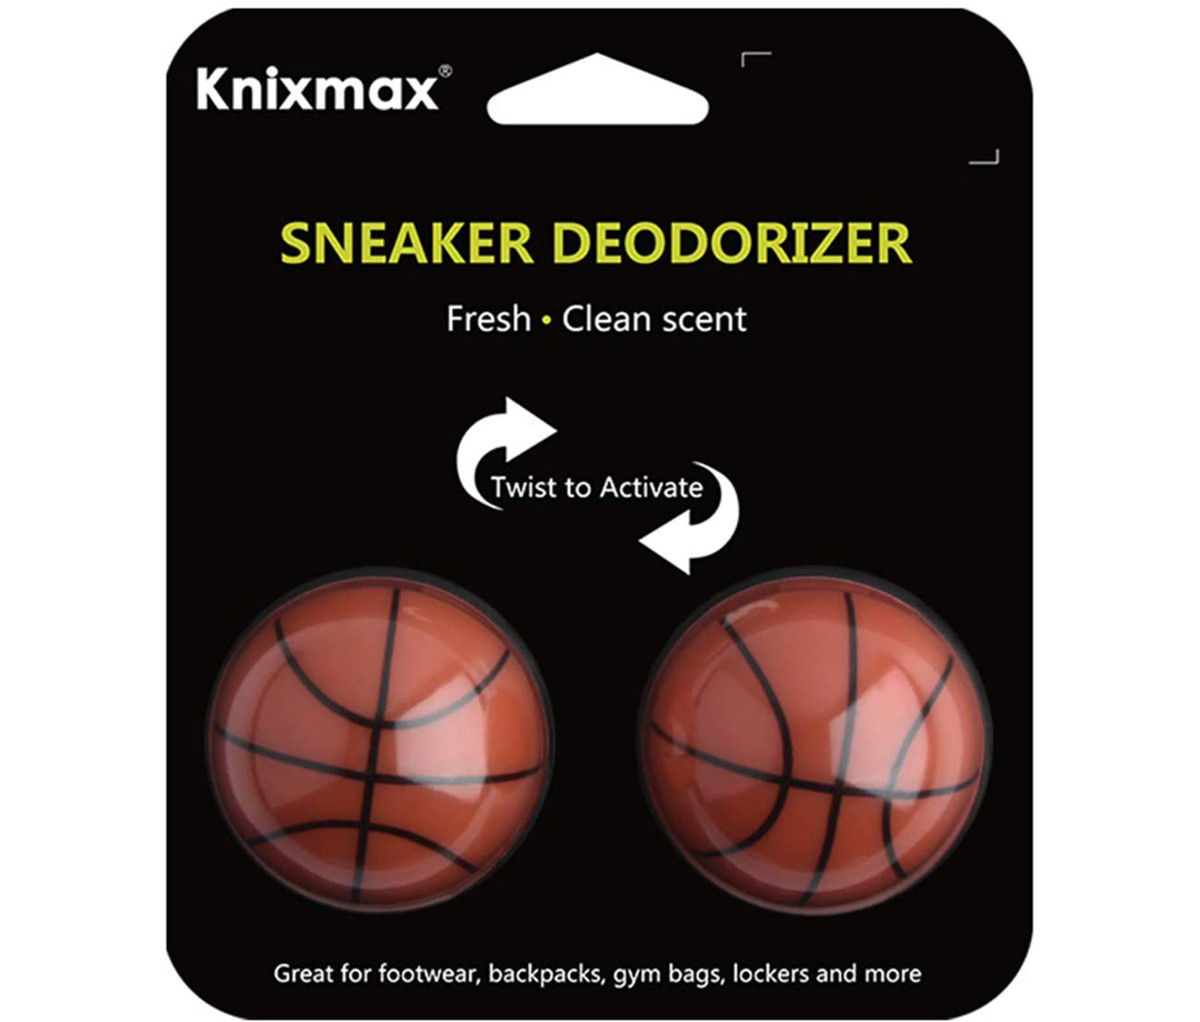 https://www.mensjournal.com/.image/t_share/MTk2MTM2OTYwNDcxNDEwMTgx/knixmax-sneaker-deodorizer-balls.jpg